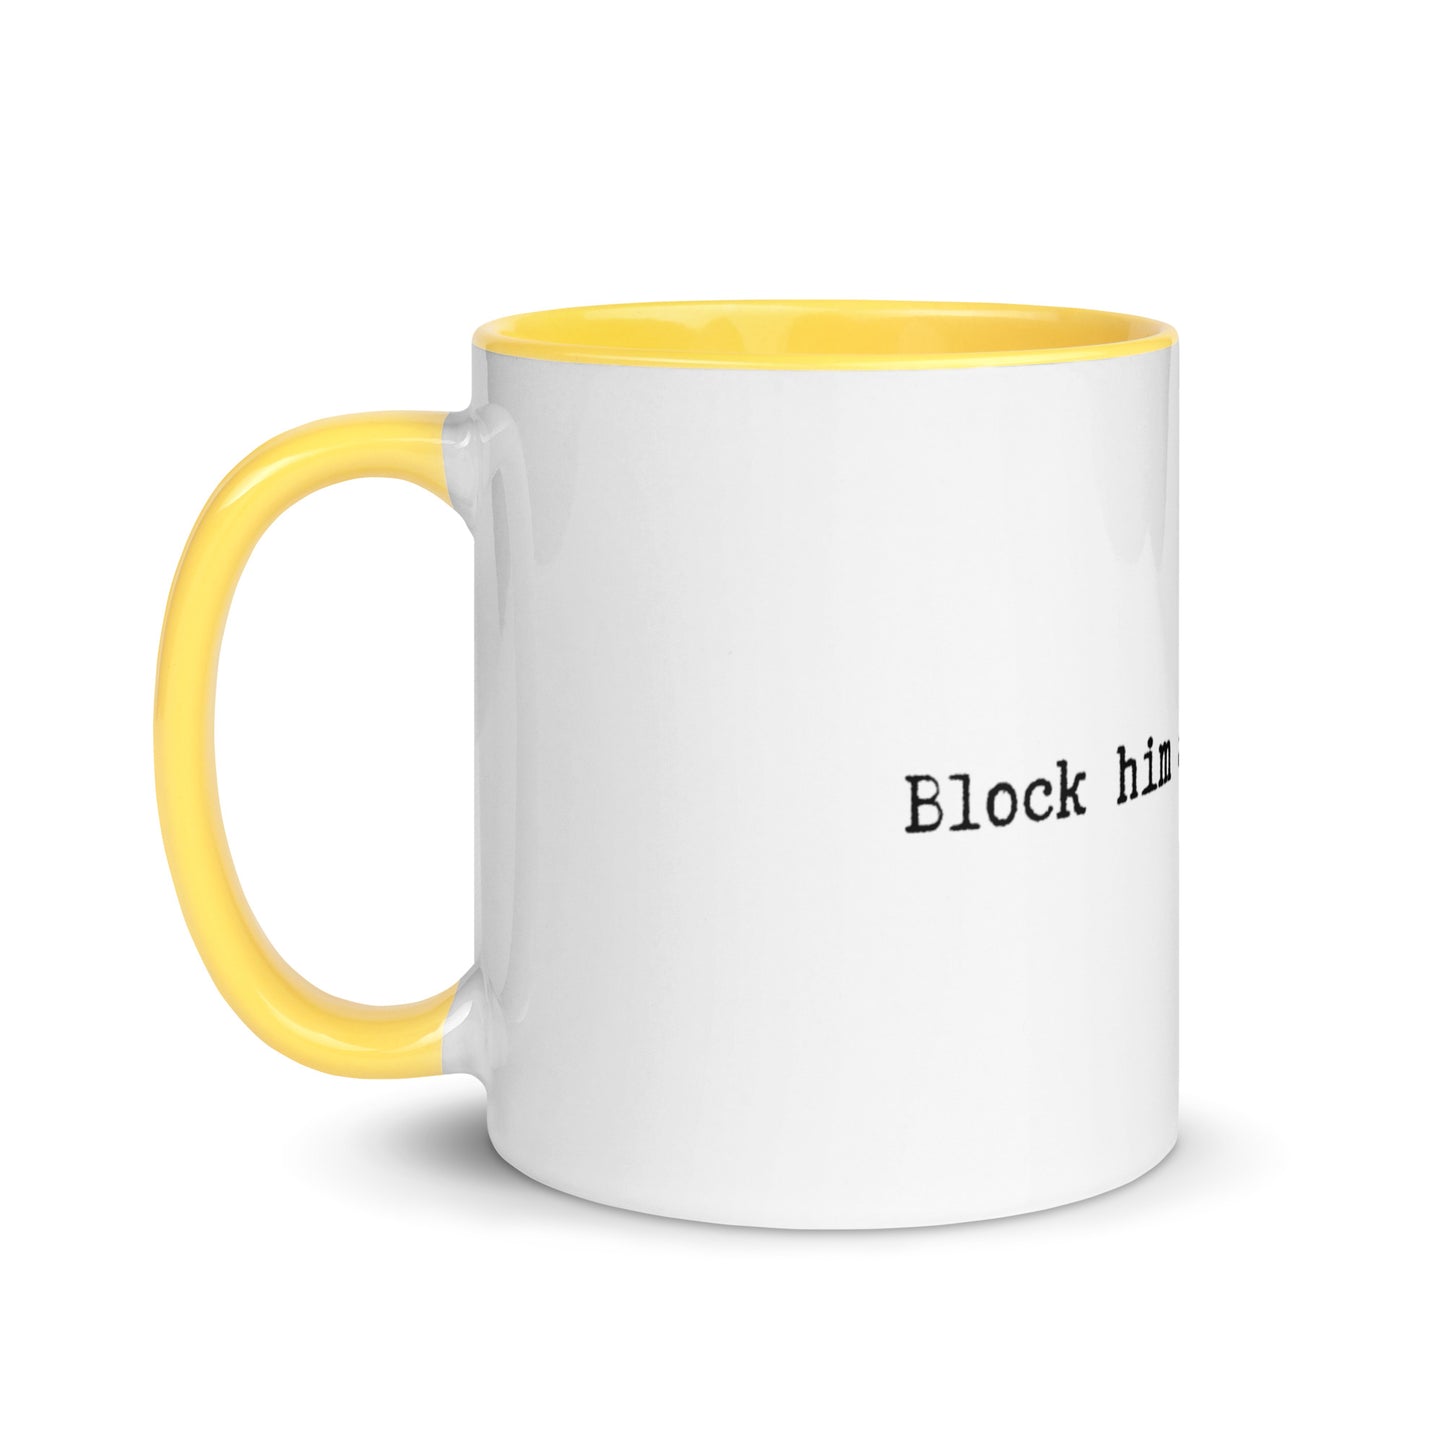 "Block Him" Mug